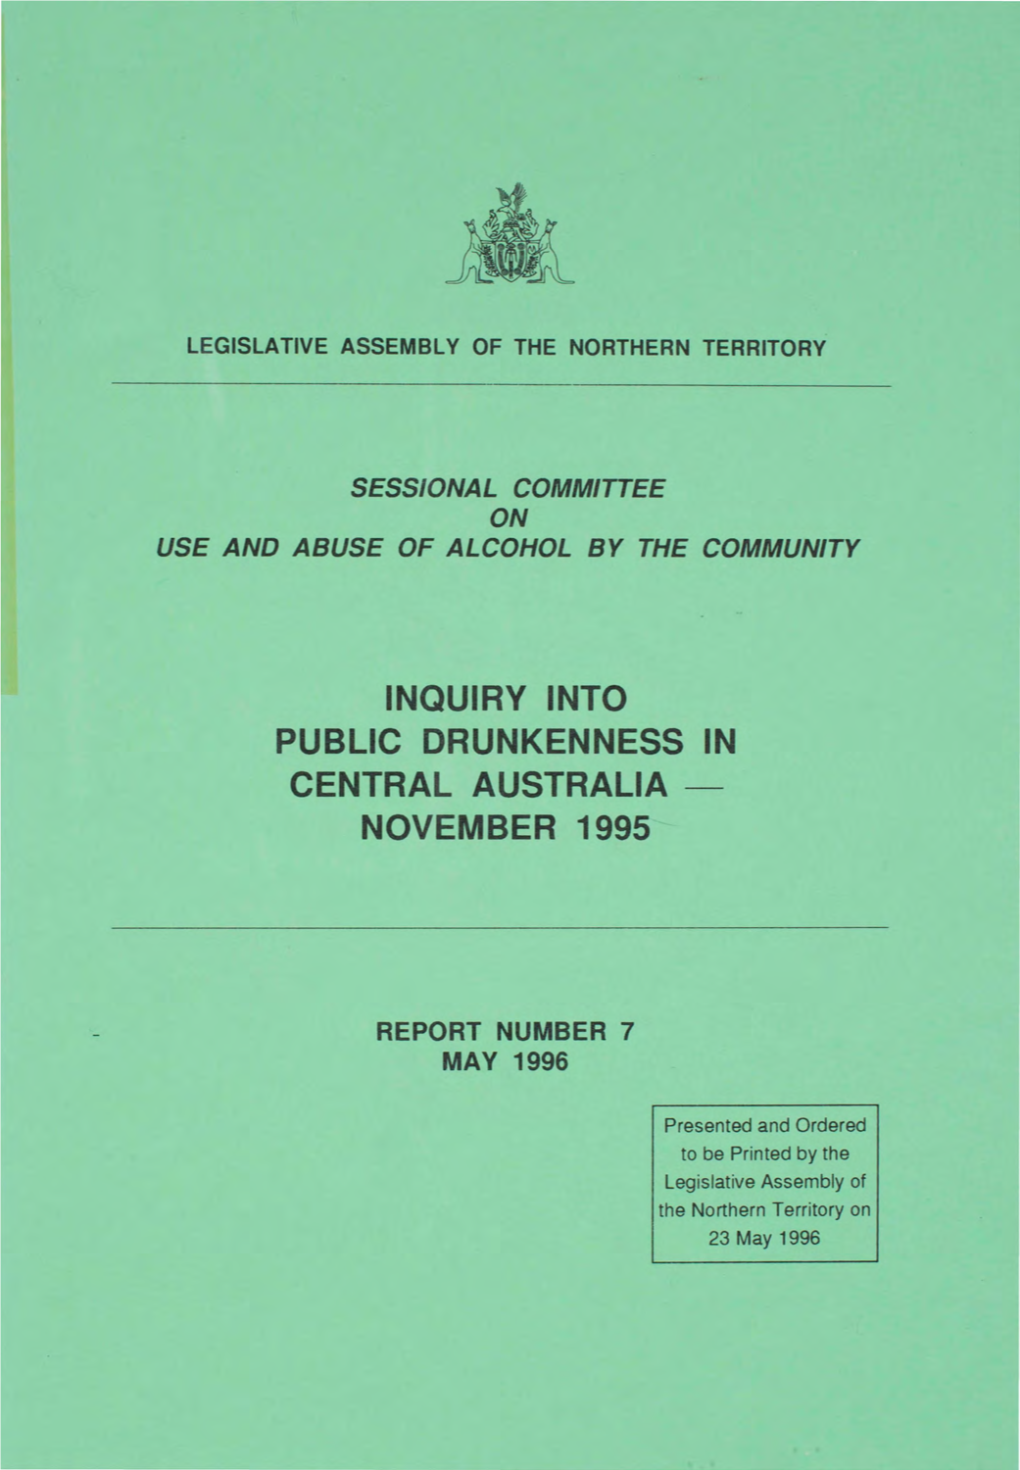 Inquiry Into Public Drunkenness in Central Australia November 1995